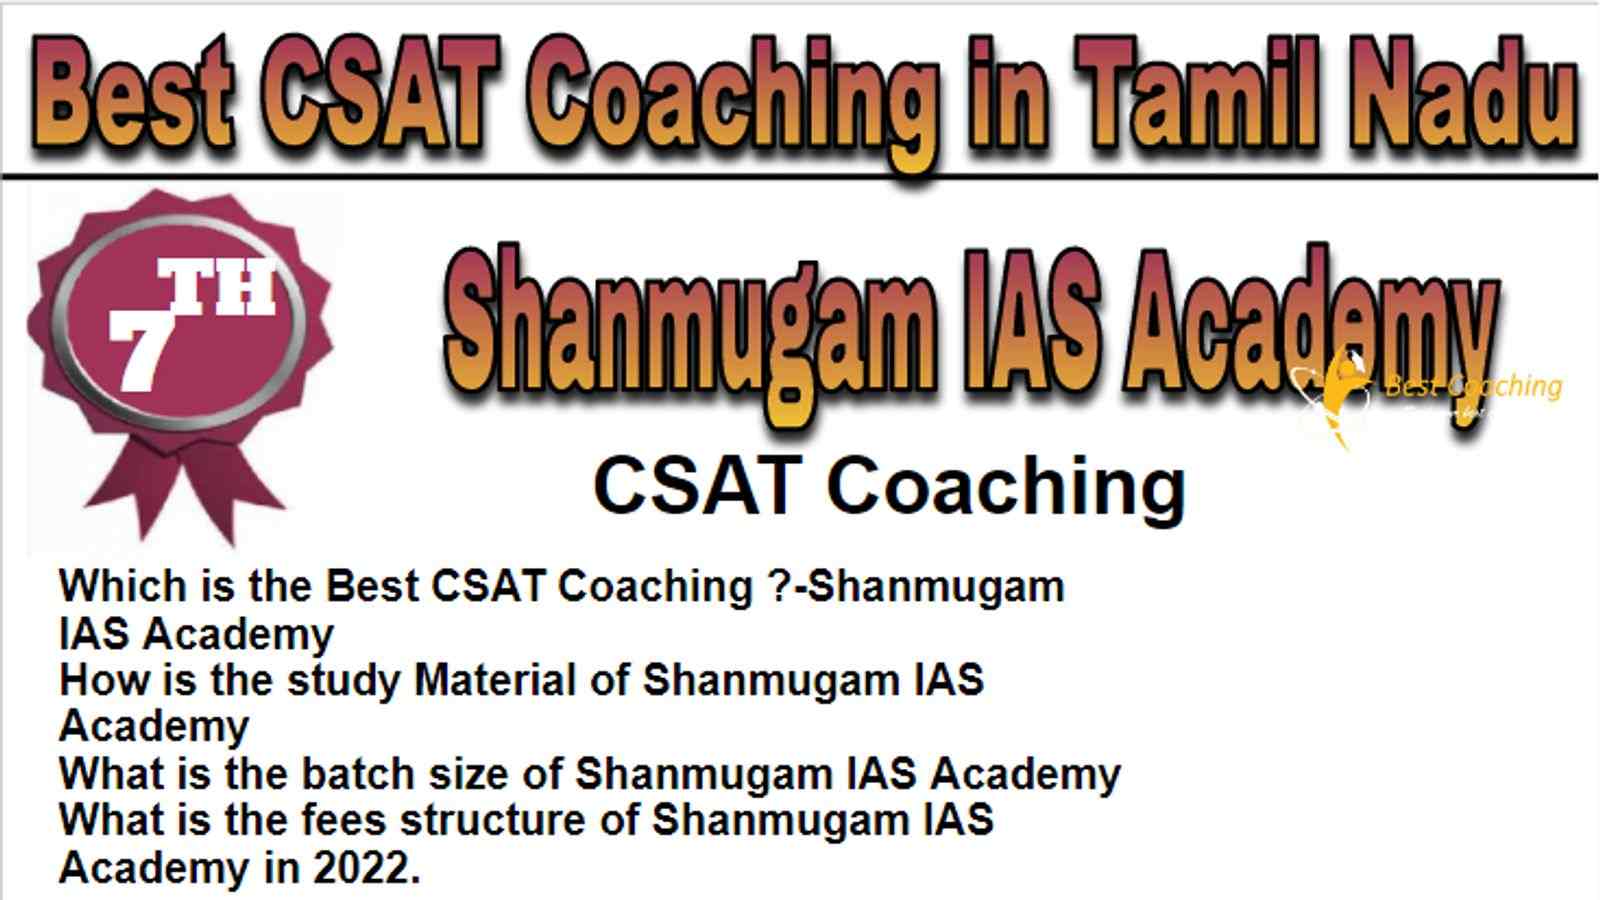 Rank 7 Best CSAT Coaching in Tamil Nadu